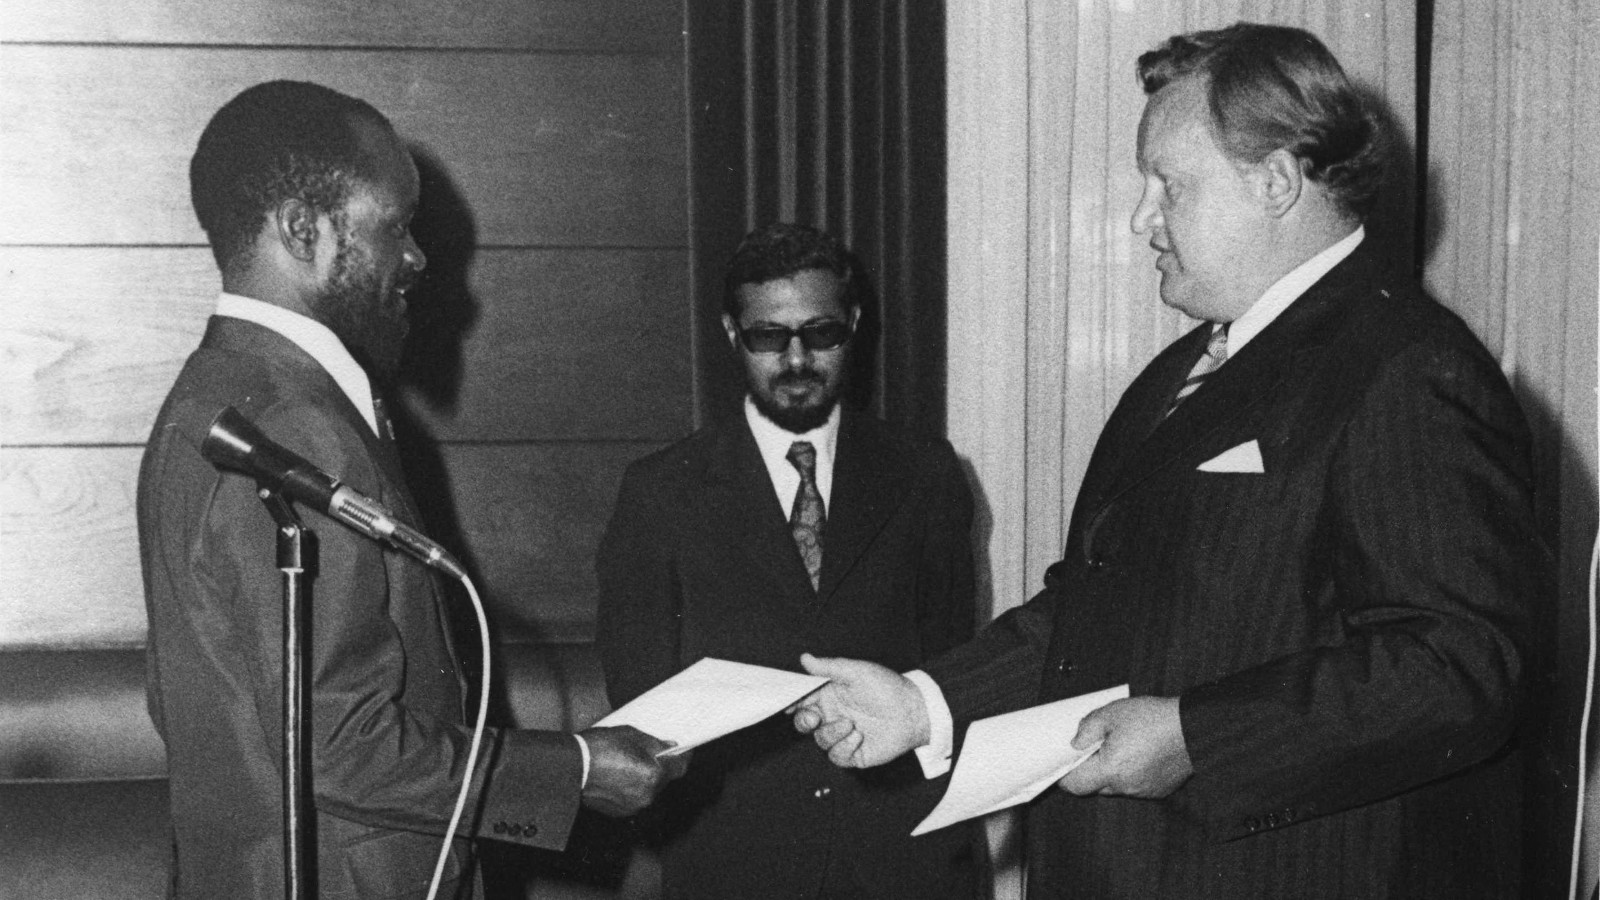 Ambassador Ahtisaari presenting his credentials to President of Mozambique Samora Machel.